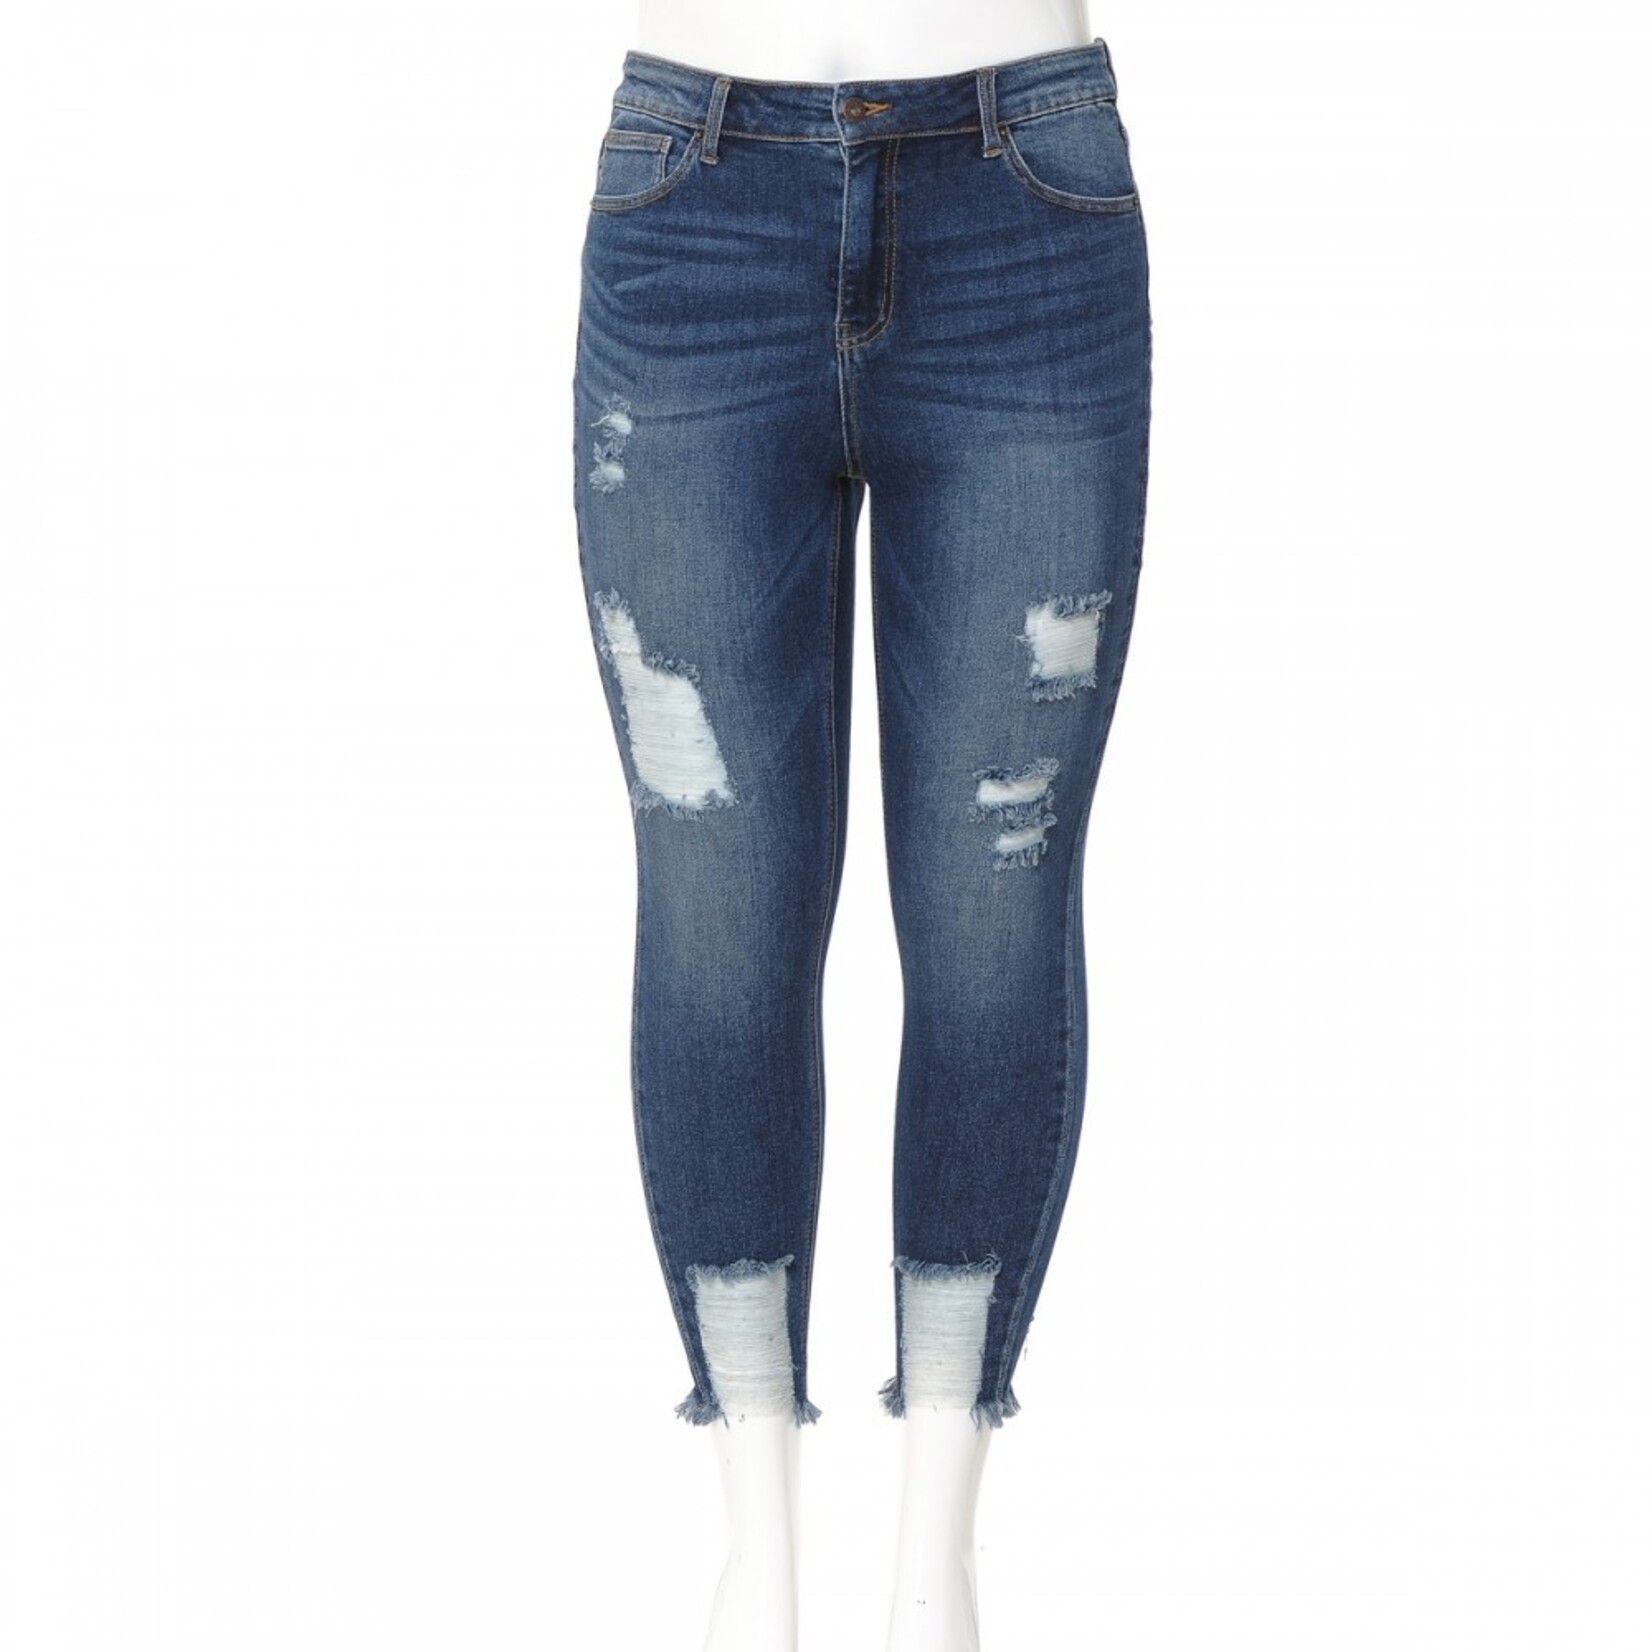 Wax Jeans - Womens Plus Size Distressed Jeans - 90188XL